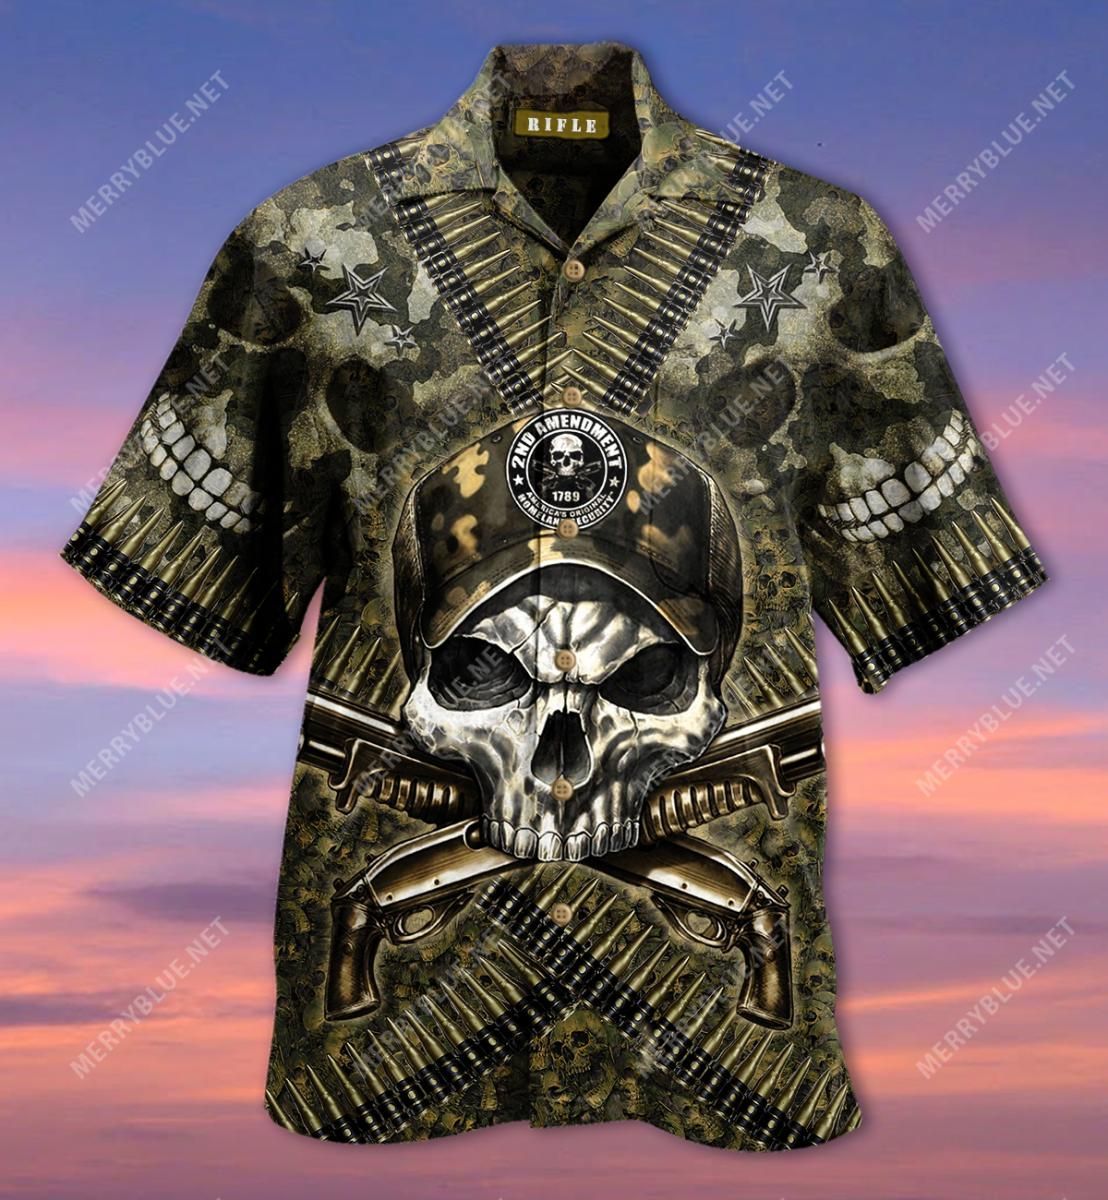 2Nd Amendment America'S Original Homeland Security Skull Aloha Hawaiian Shirt Colorful Short Sleeve Summer Beach Casual Shirt For Men And Women